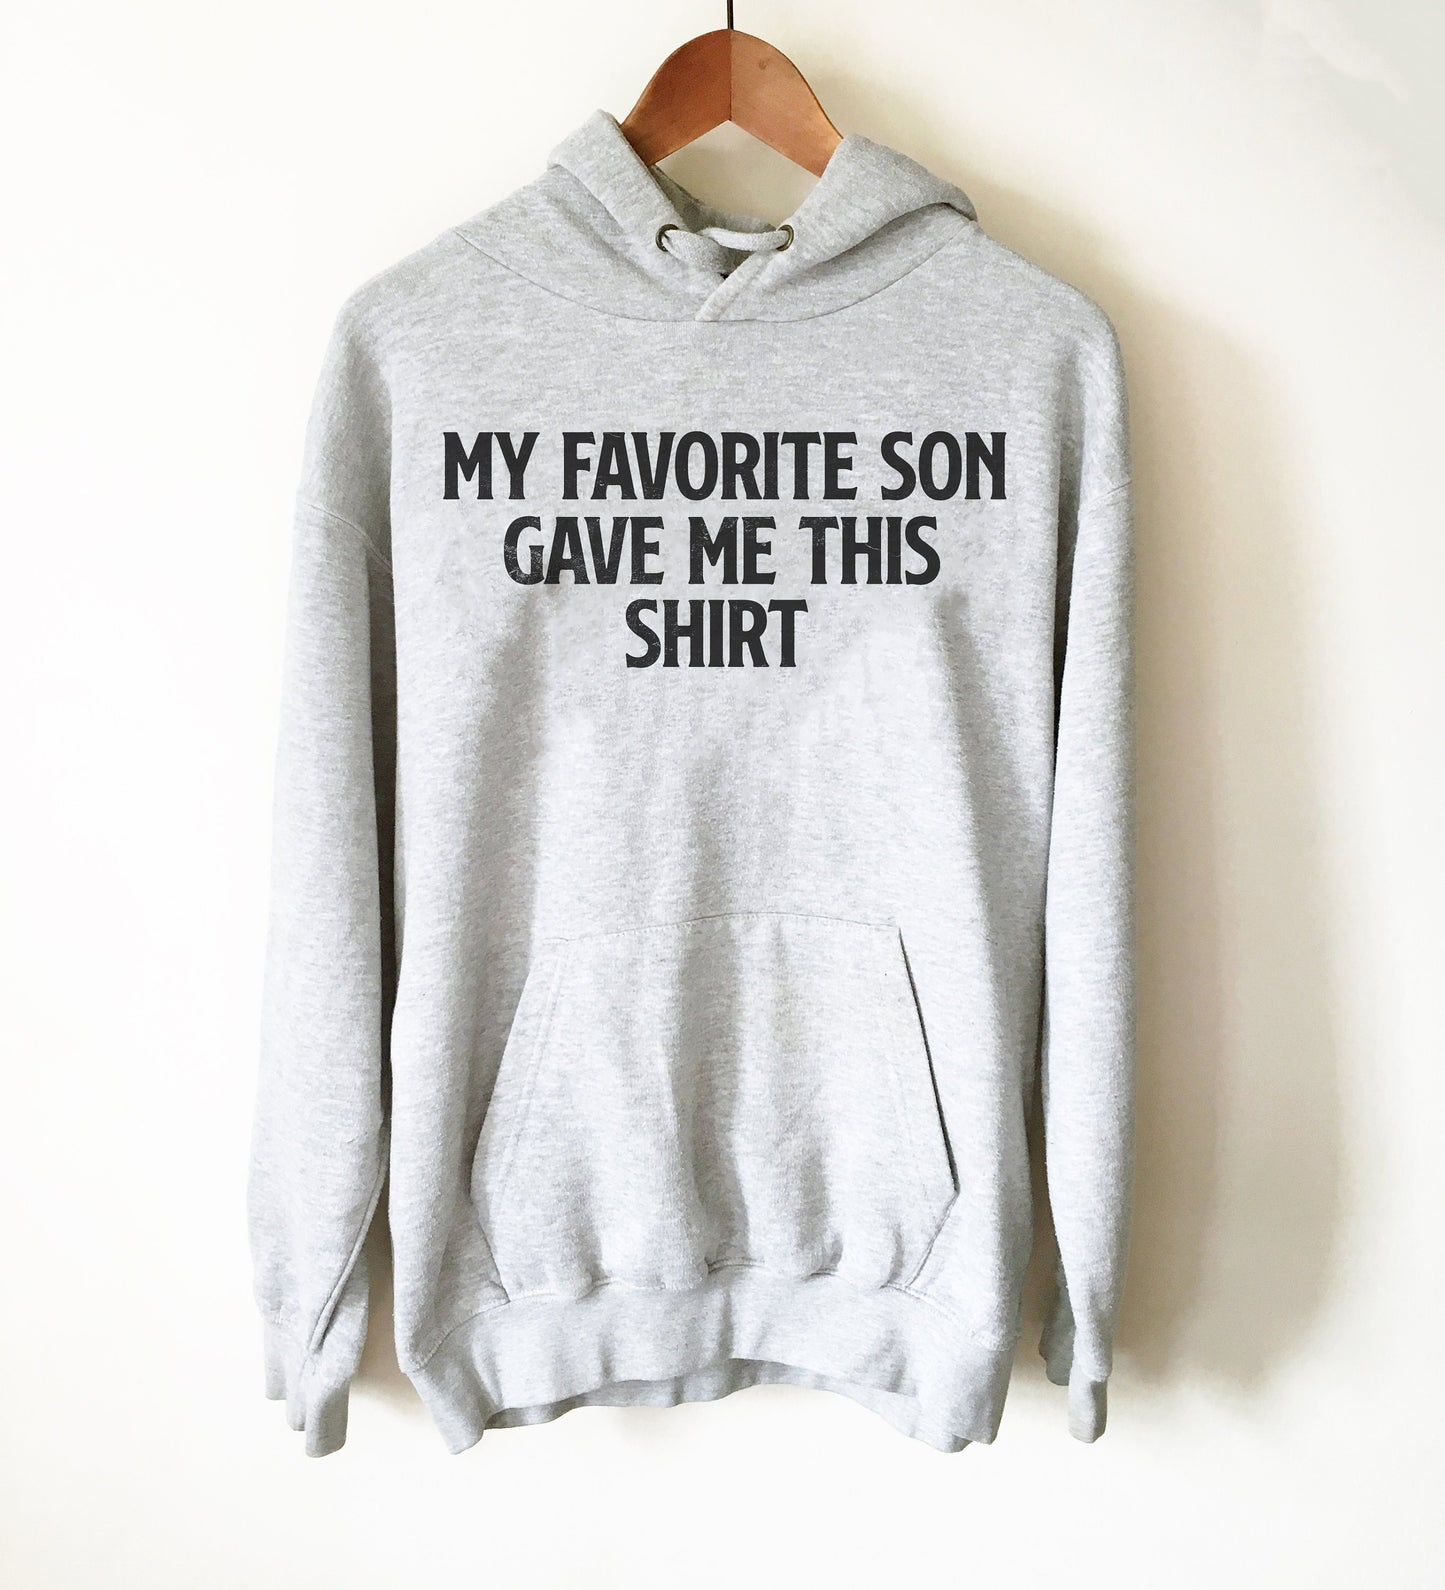 My Favorite Son Gave Me This Shirt Hoodie - Fathers Day Shirt, Fathers Day Gift, Mom Shirt, Mom Gift, Dad Shirt